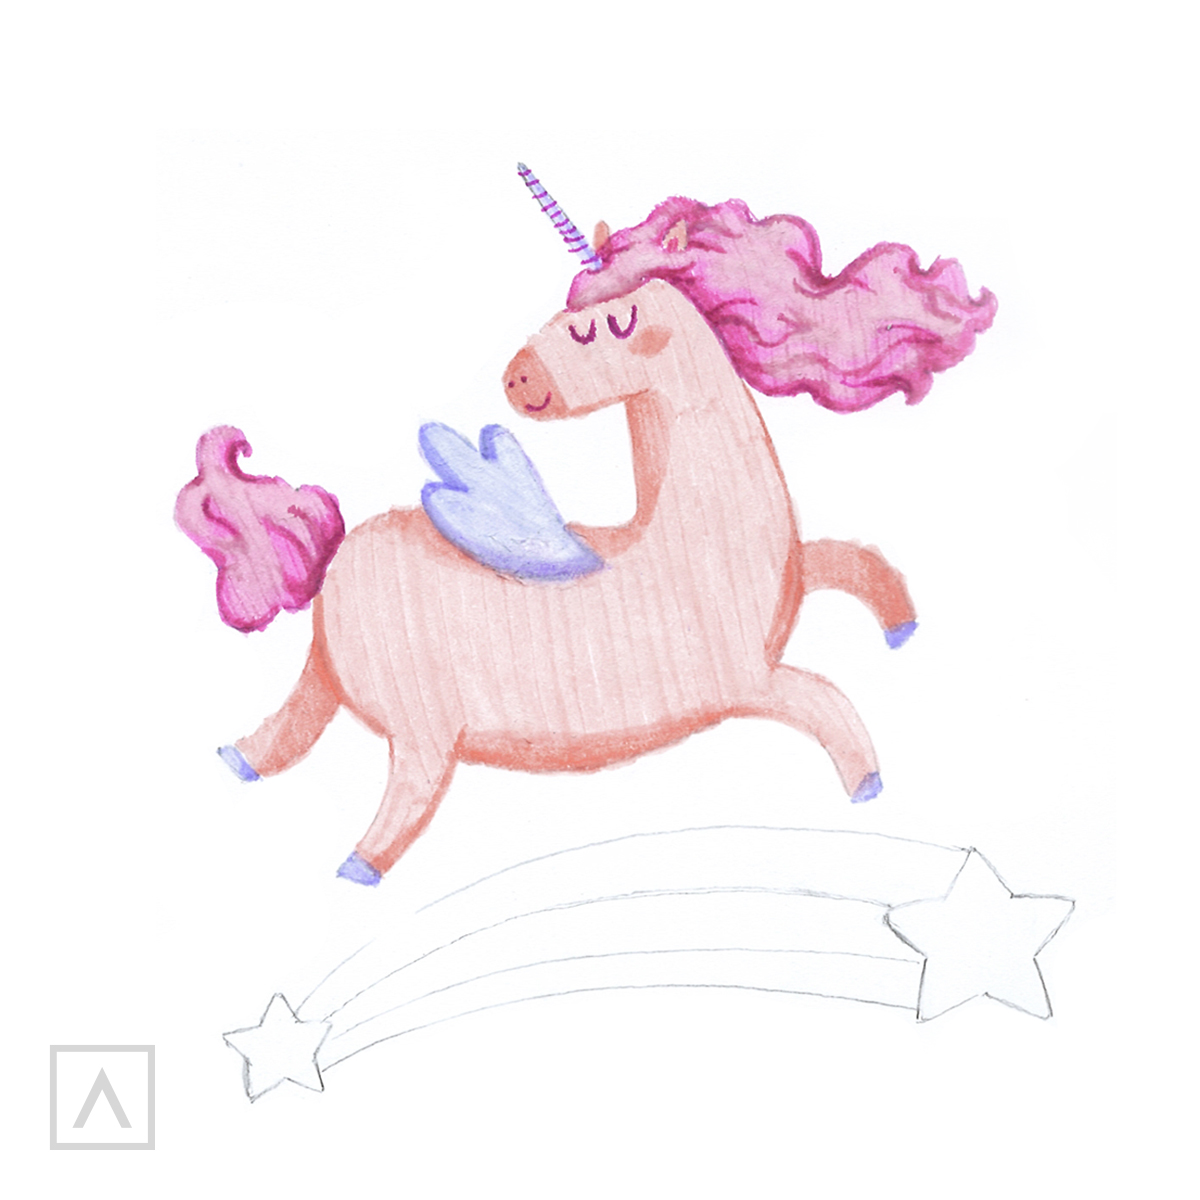 How to Draw a Unicorn - Step 8